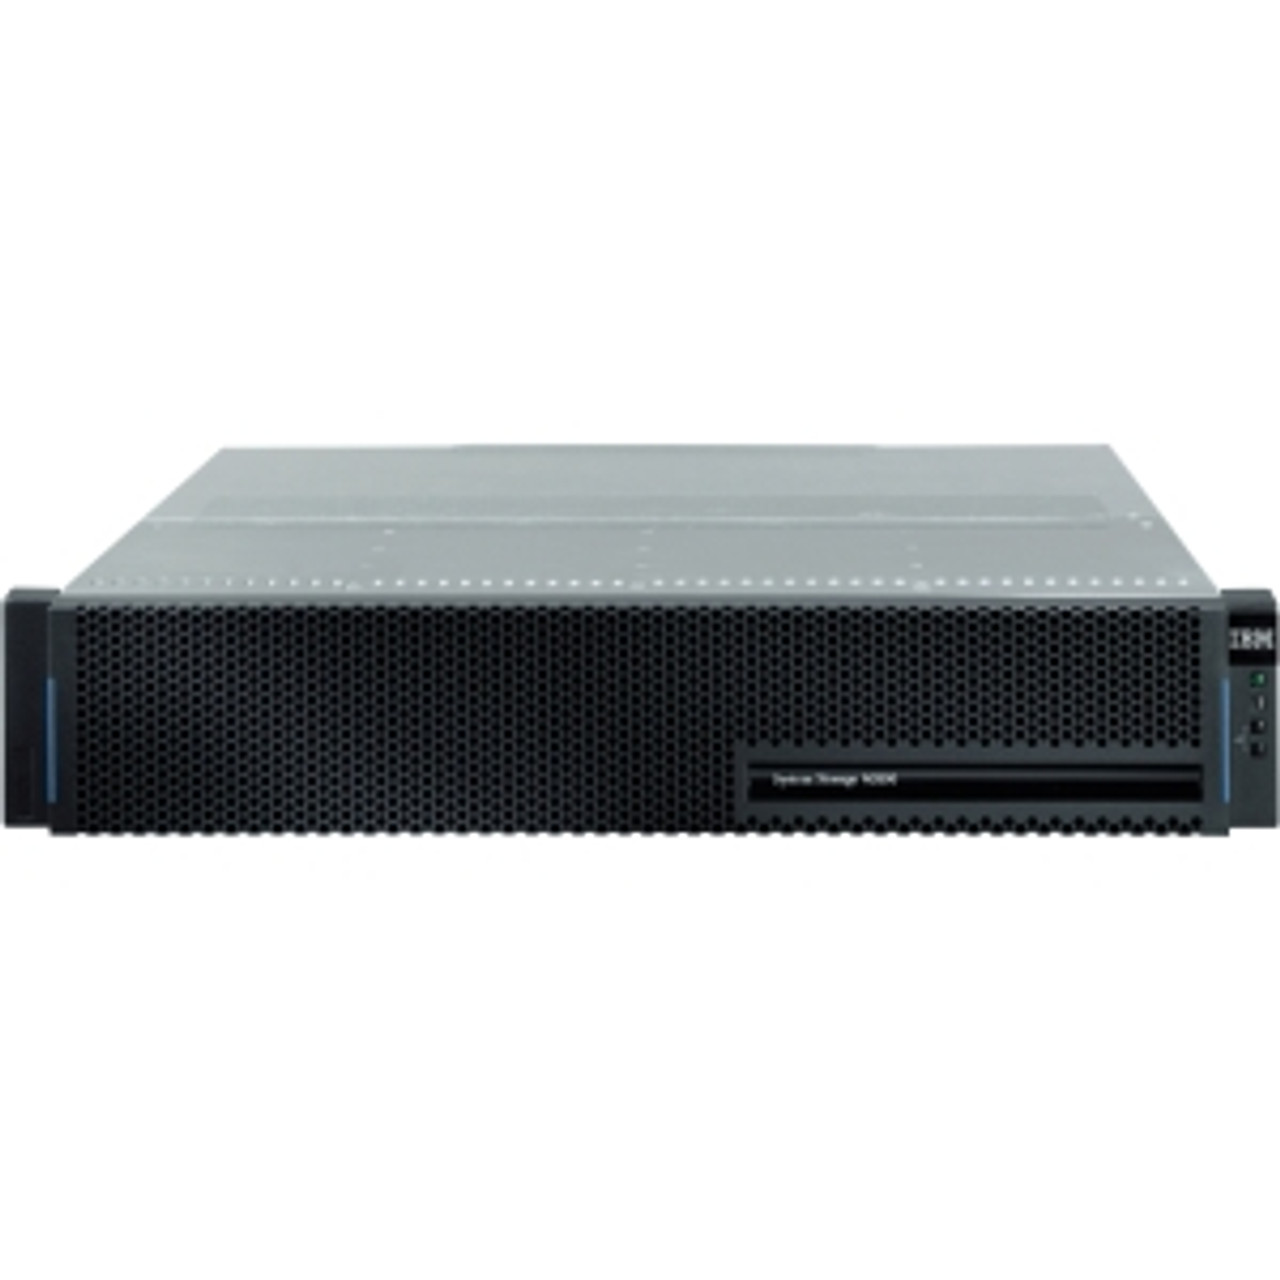 2870-592 - IBM System Storage N3300 A20 Network Storage Server - 2 x Intel 2.20 GHz - RJ-45 Network Fibre Channel Serial RJ-45 Management